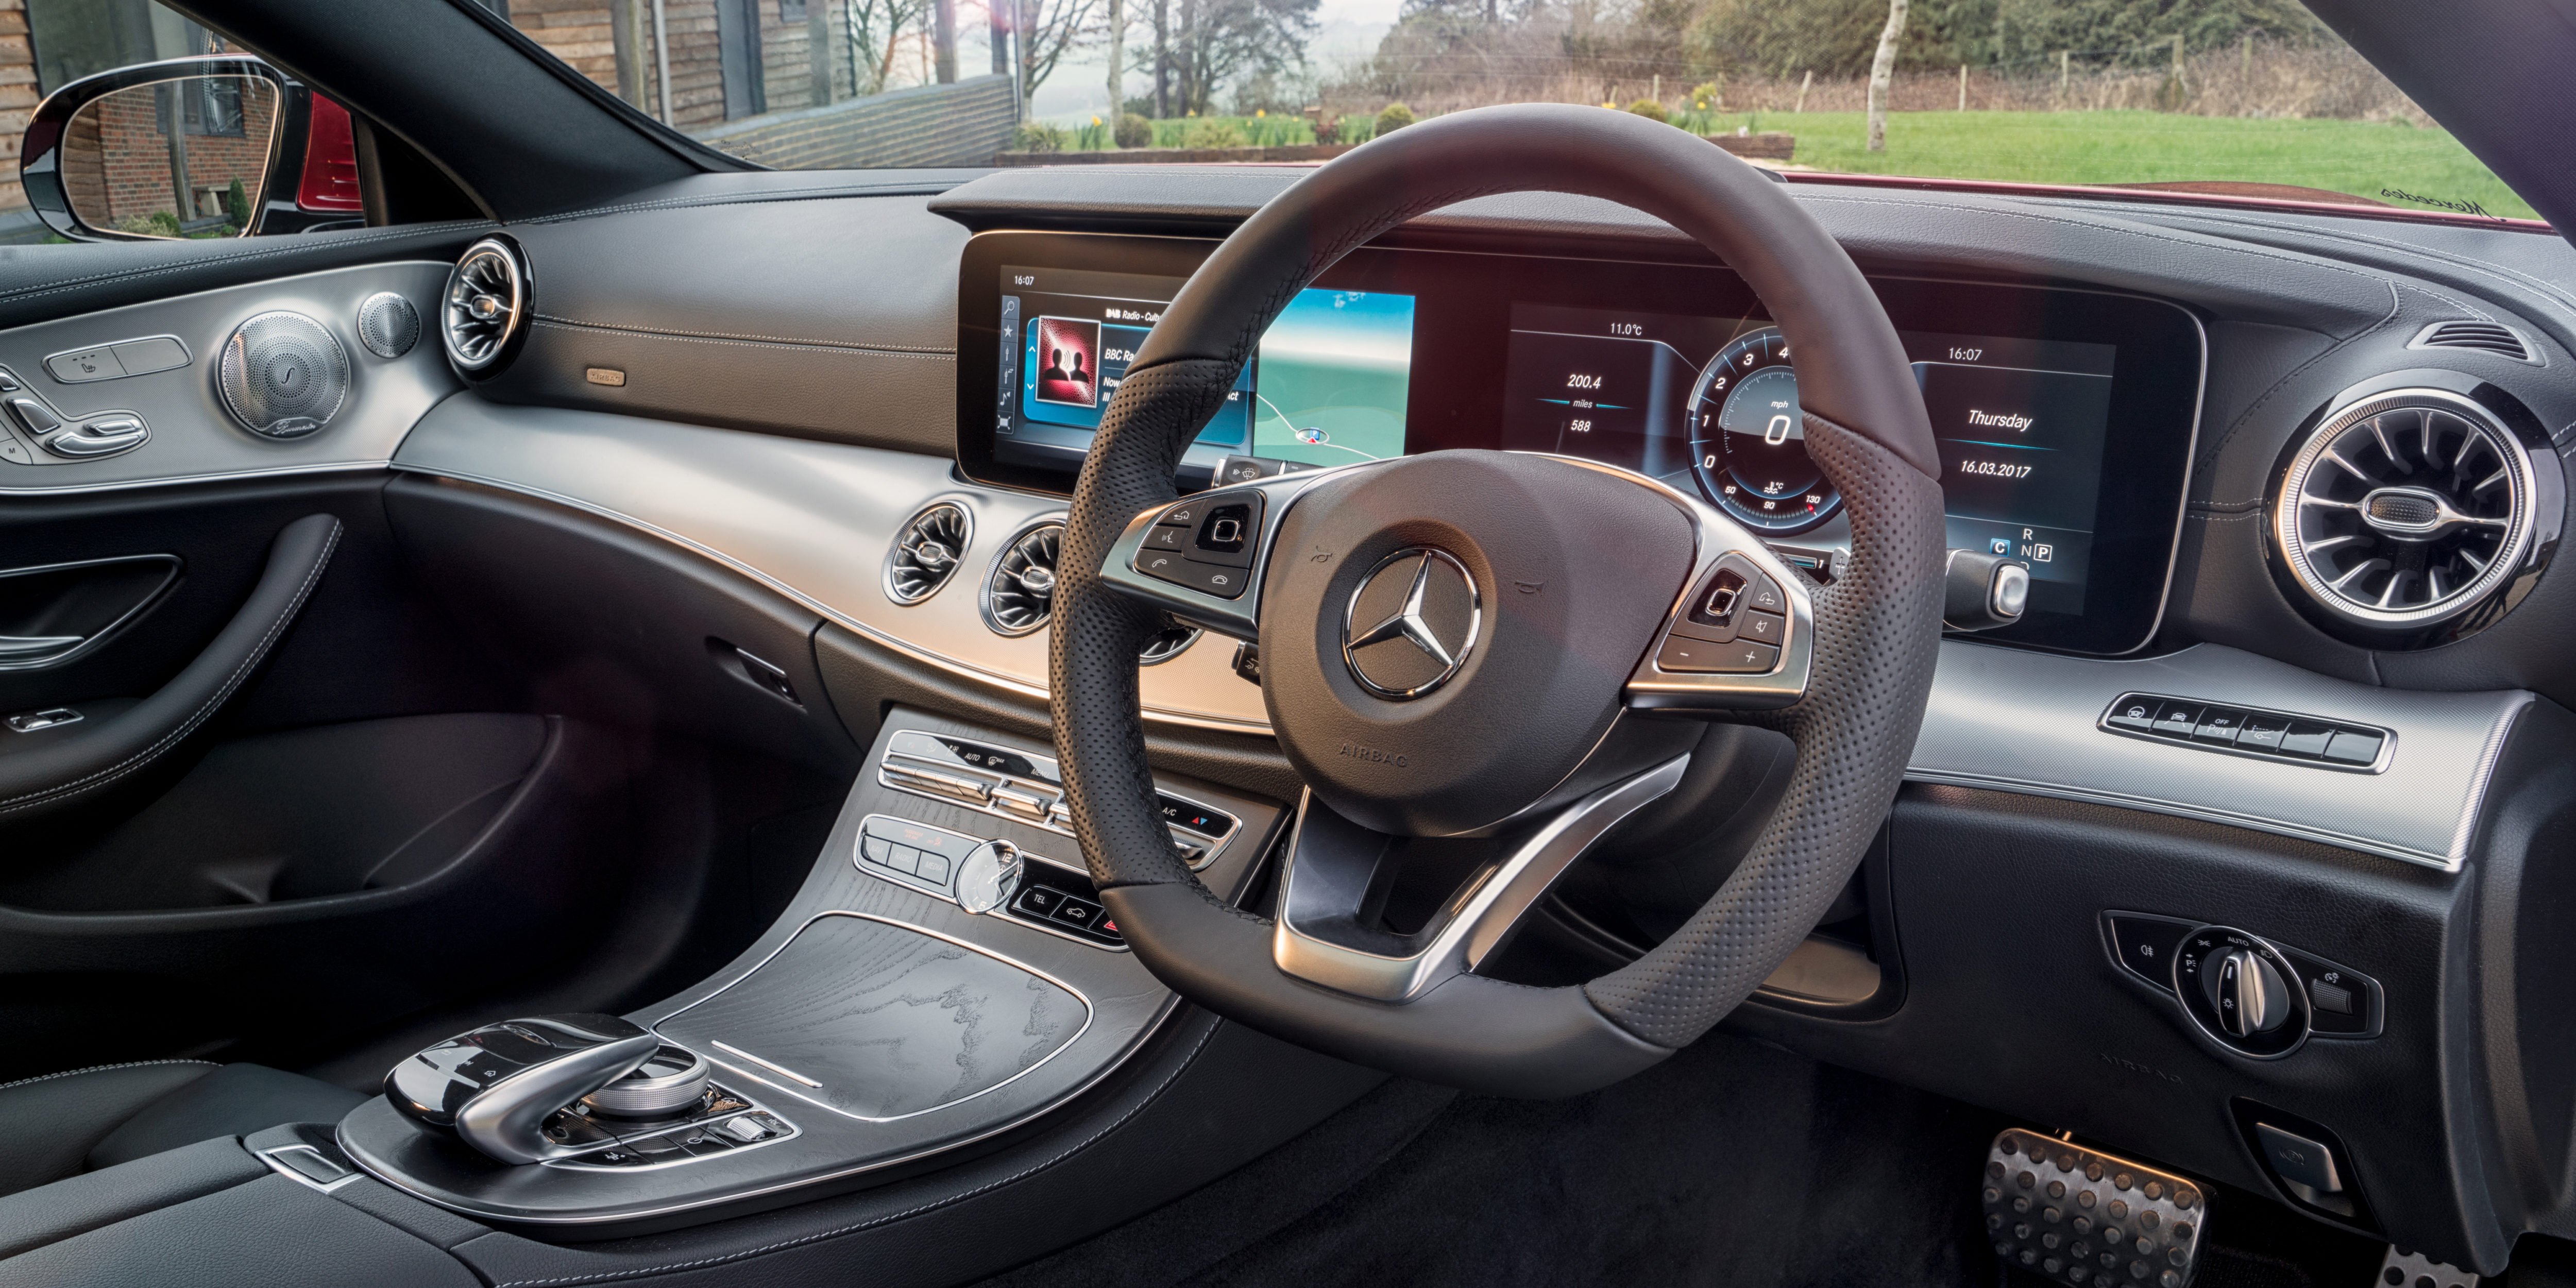 Mercedes A-Class Sedan (V177) interior 2018